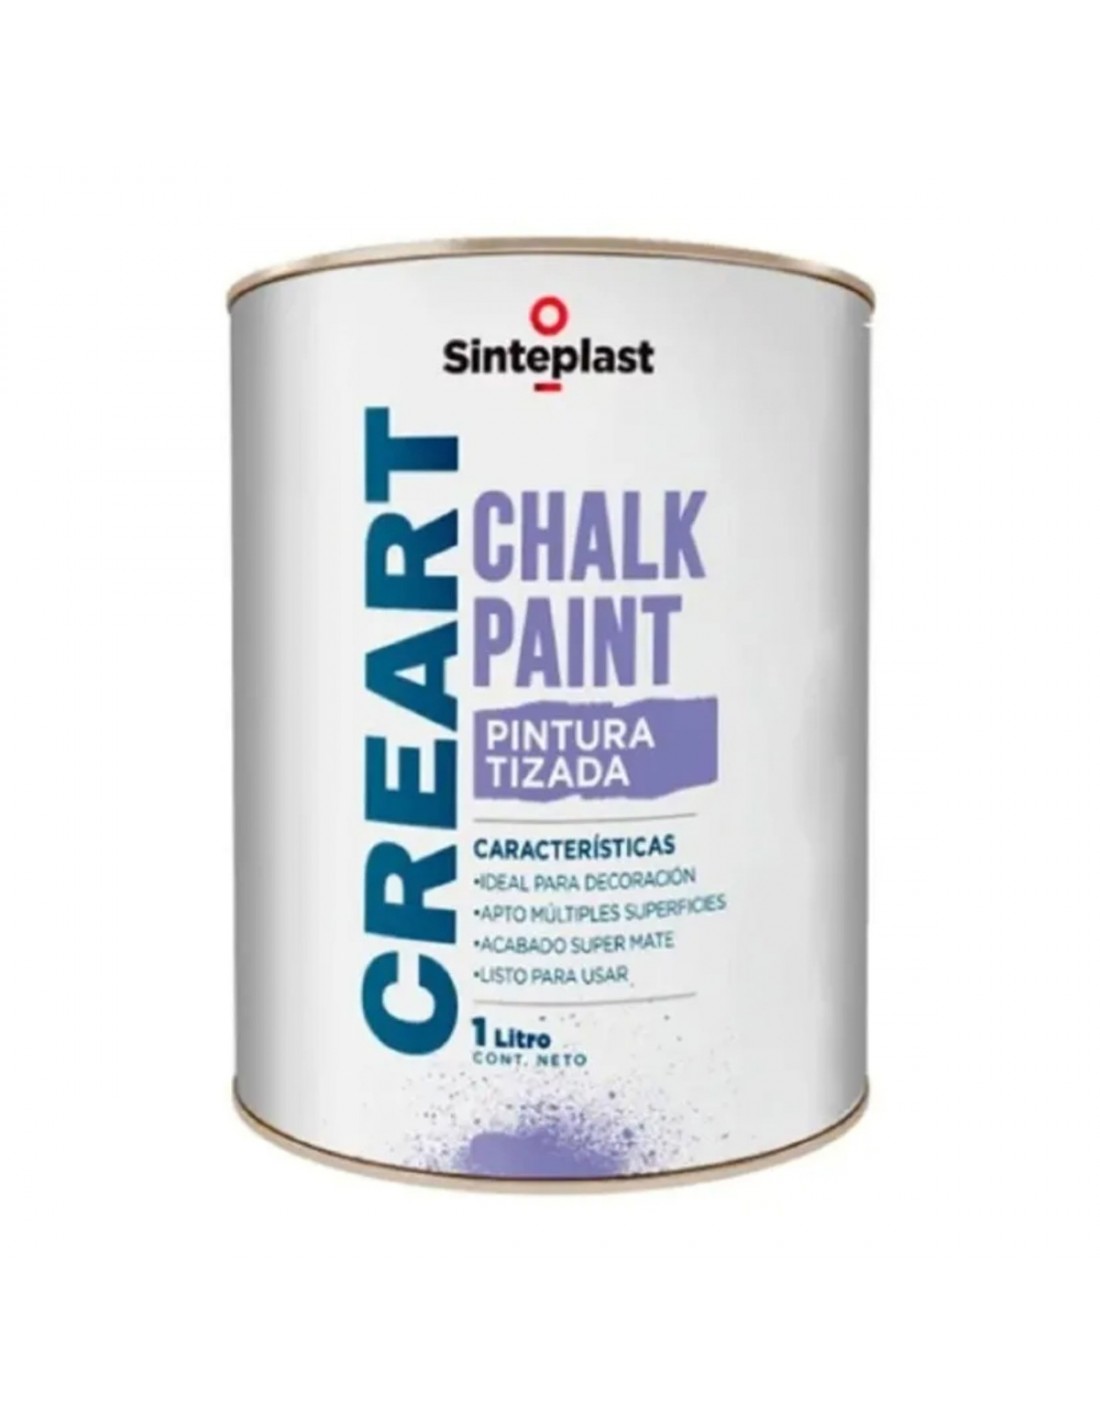 Mount Bank gloria Emular Pintura Tizada Chalk Paint Al Agua Sinteplast VERDE PACIFICO 01L